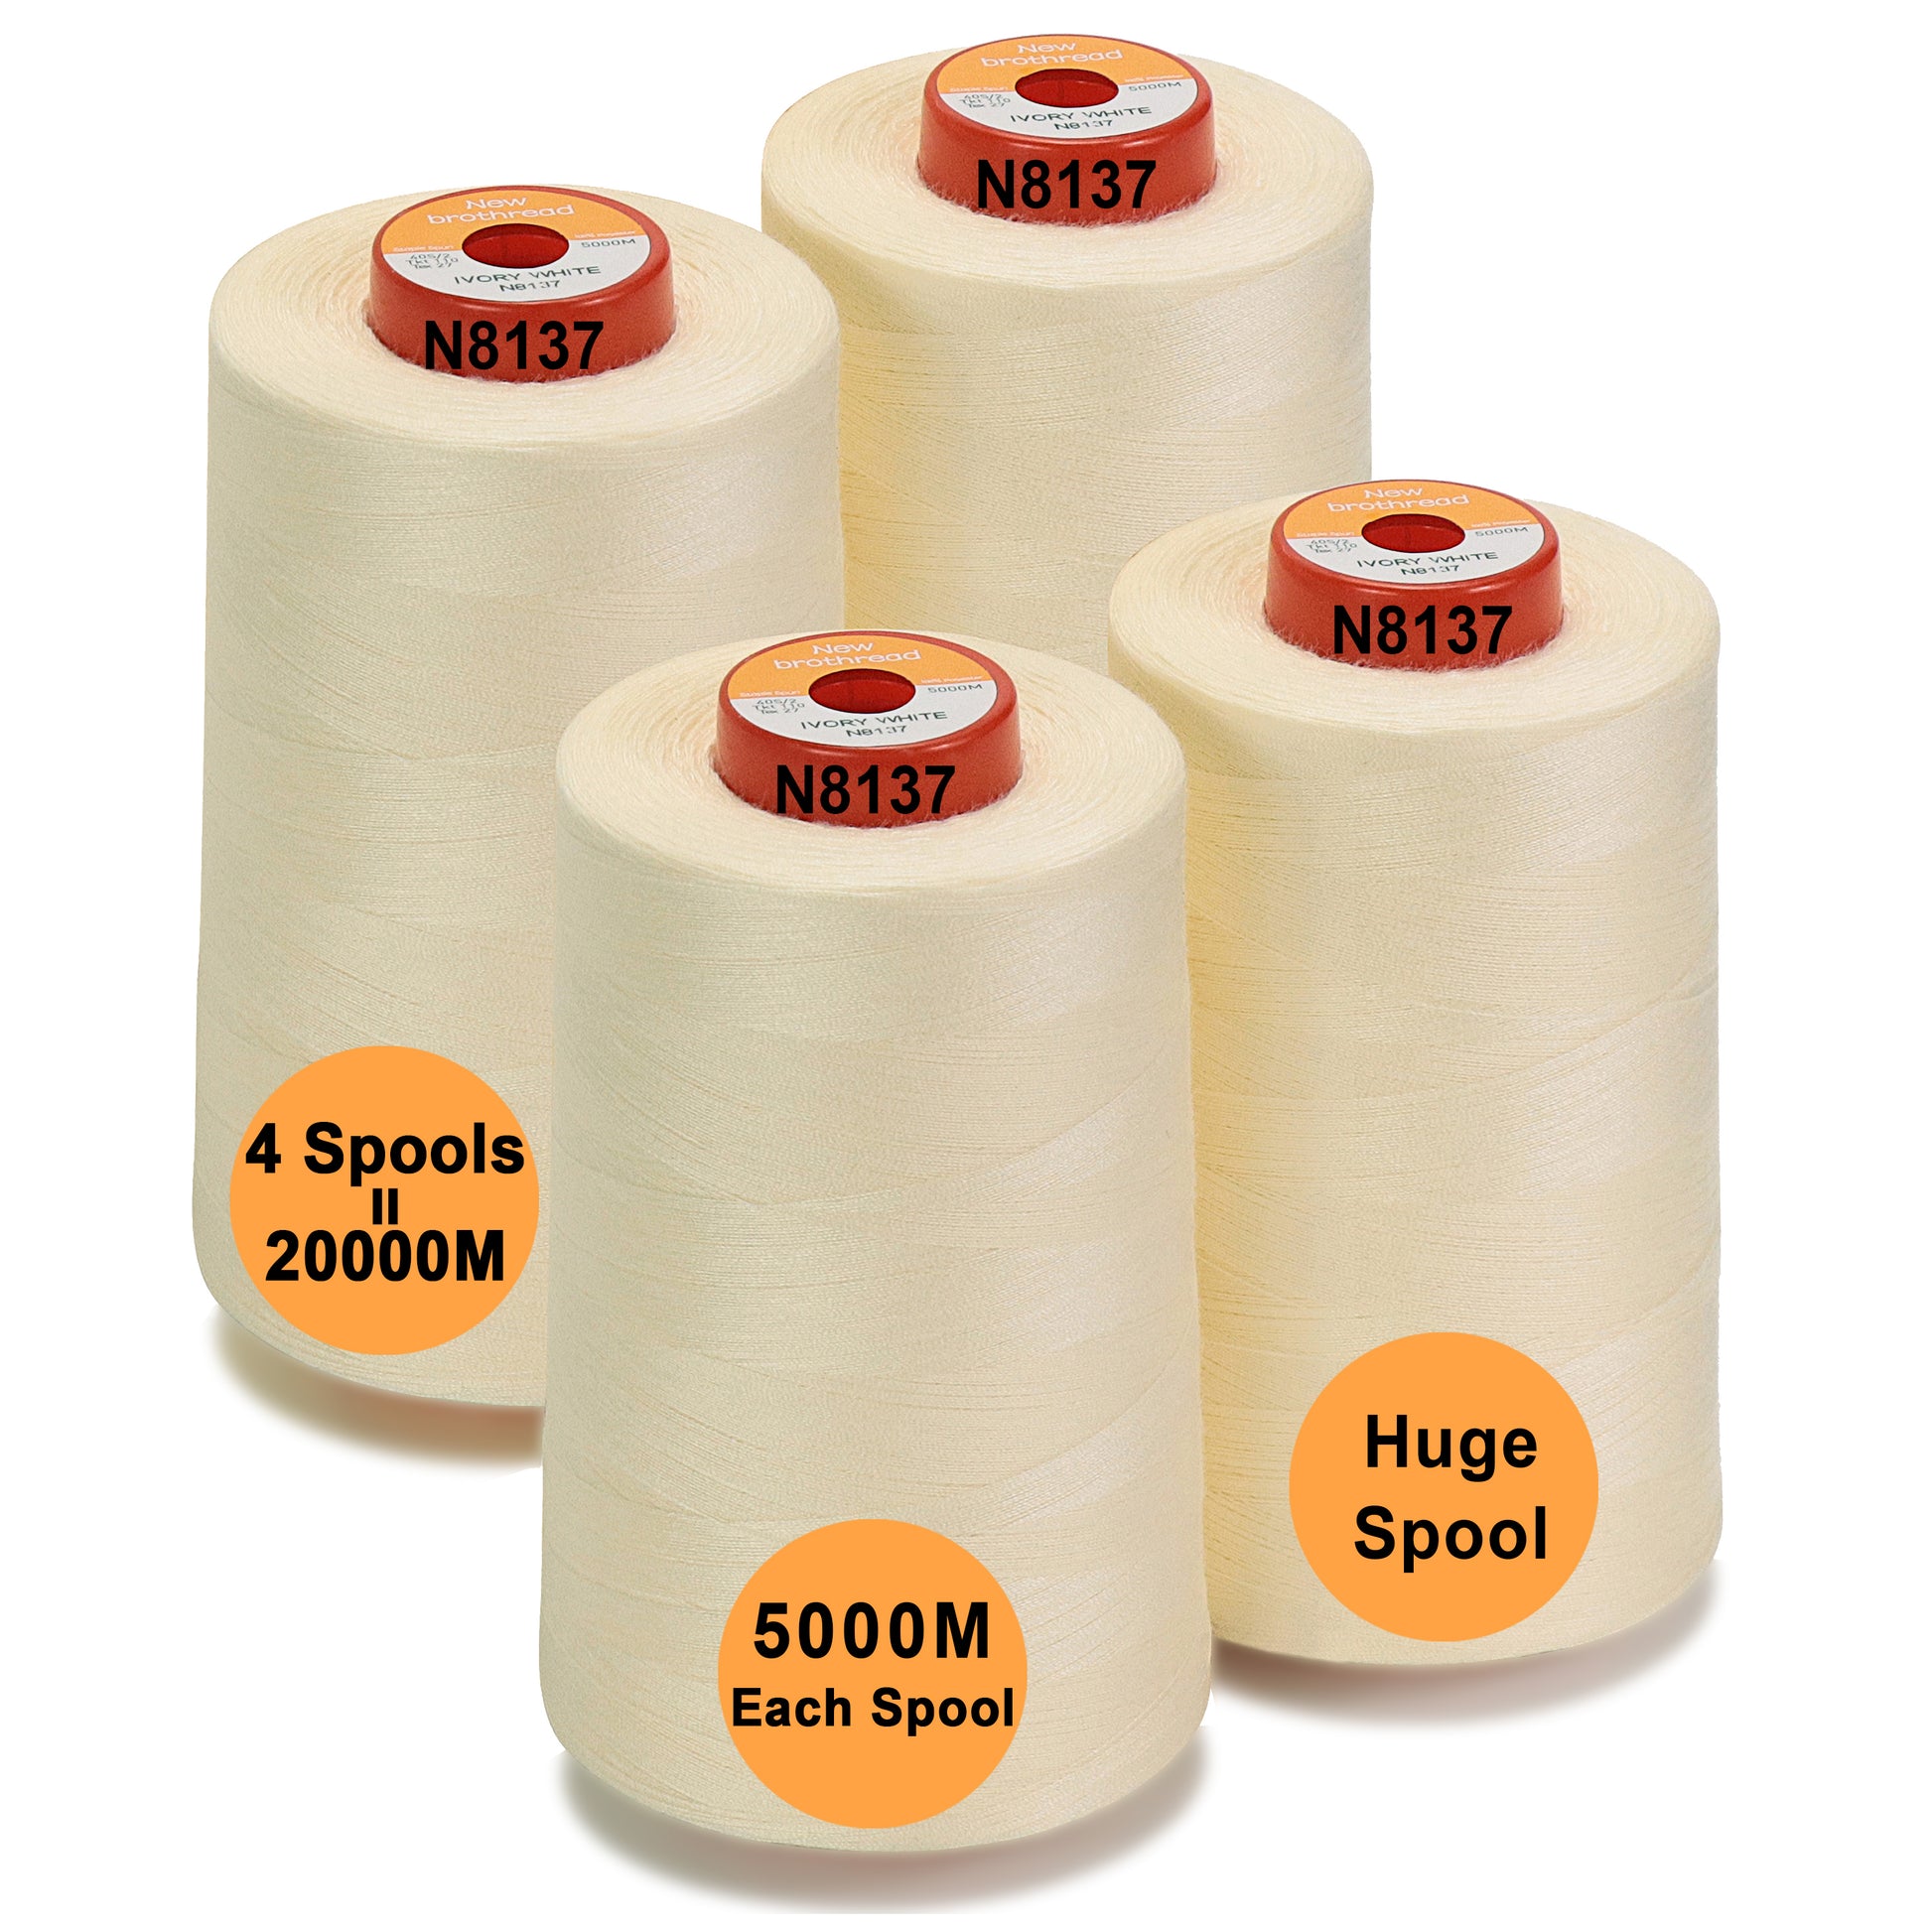 New brothread Single Huge Spool 5000M Each Polyester Embroidery Machin